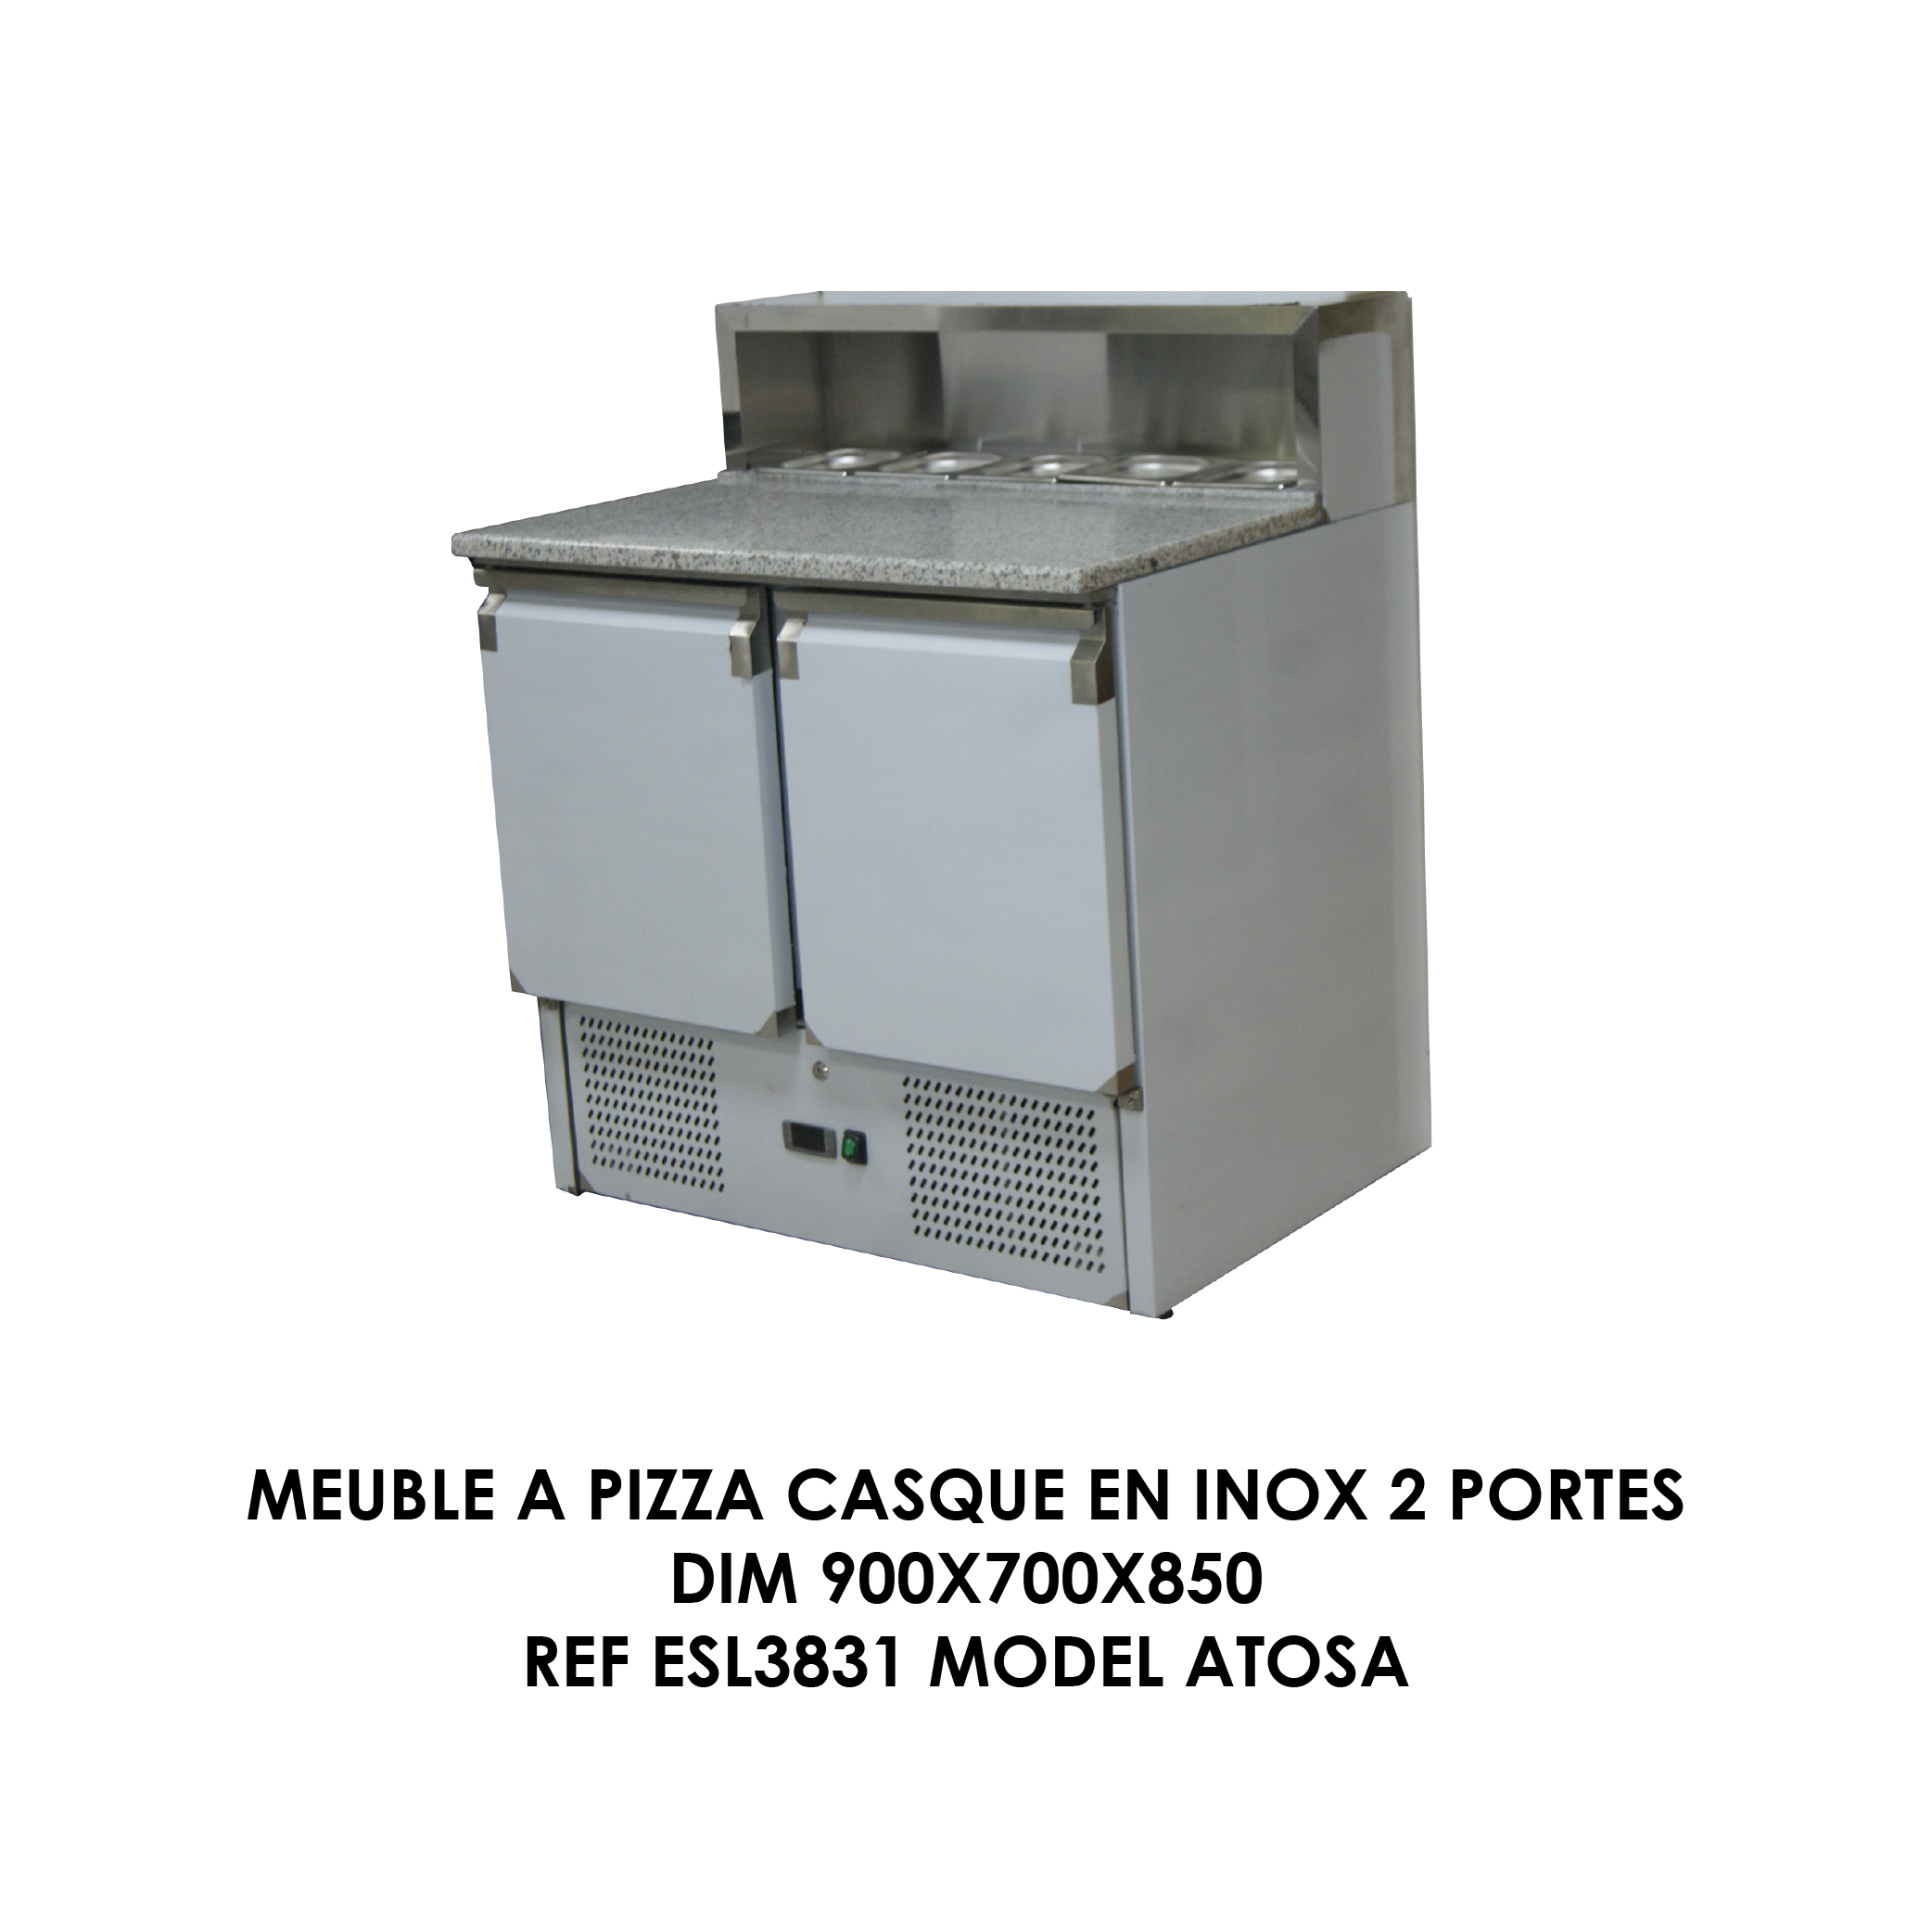 MEUBLE A PIZZA CASQUE EN INOX 2 PORTES DIM 900X700X850 REF ESL3831 MODEL ATOSA